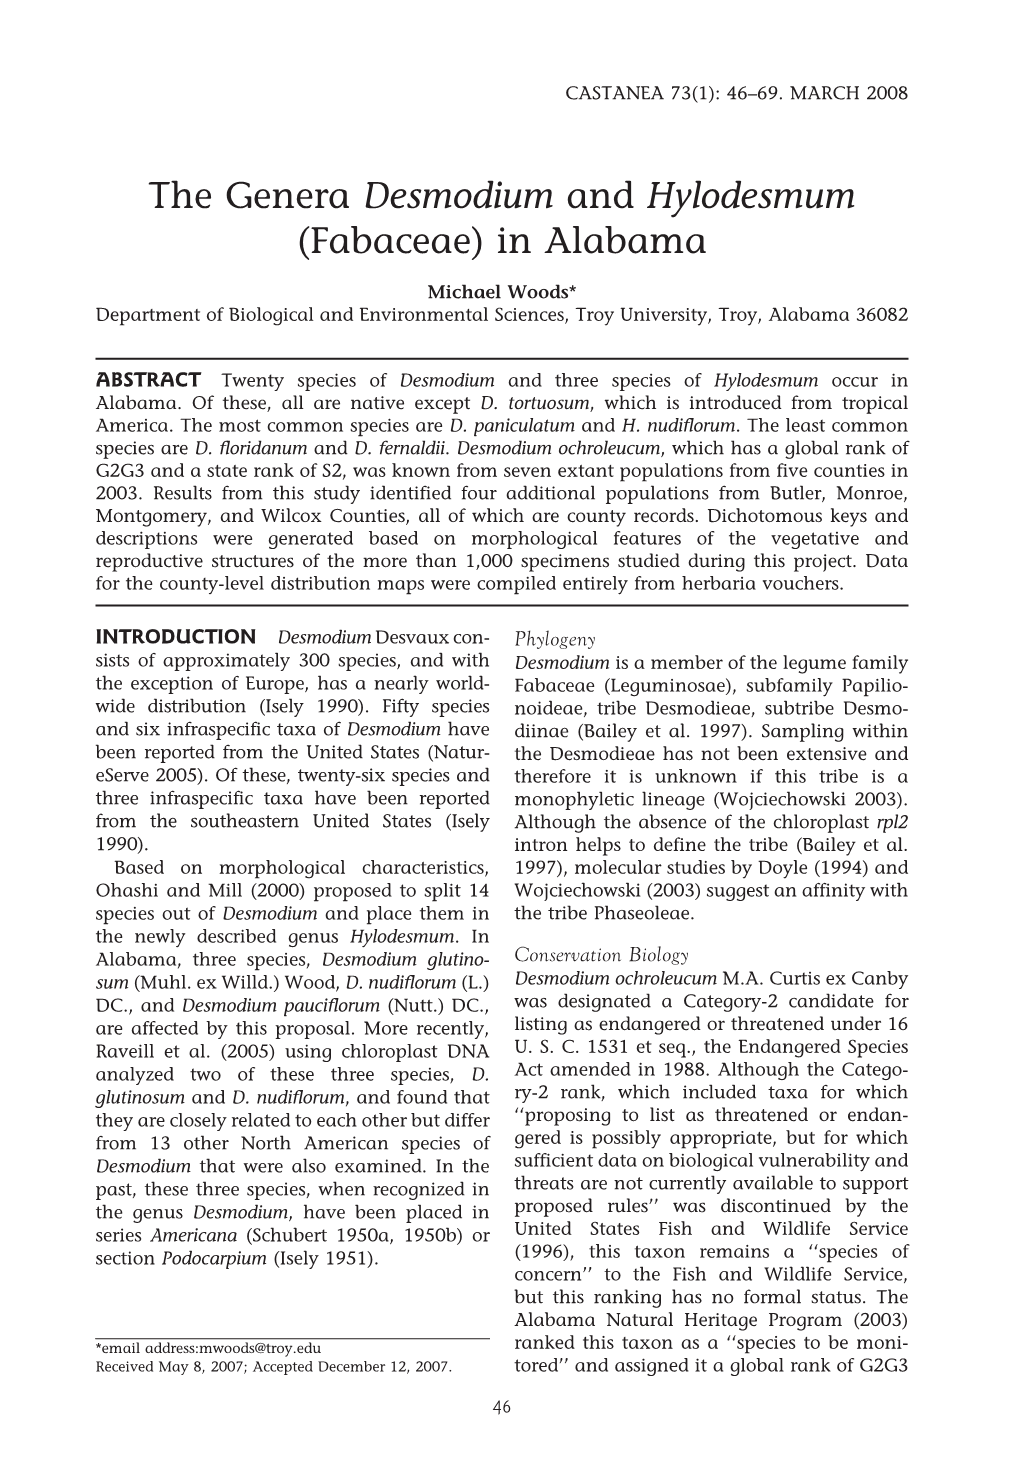 The Genera Desmodium and Hylodesmum (Fabaceae) in Alabama